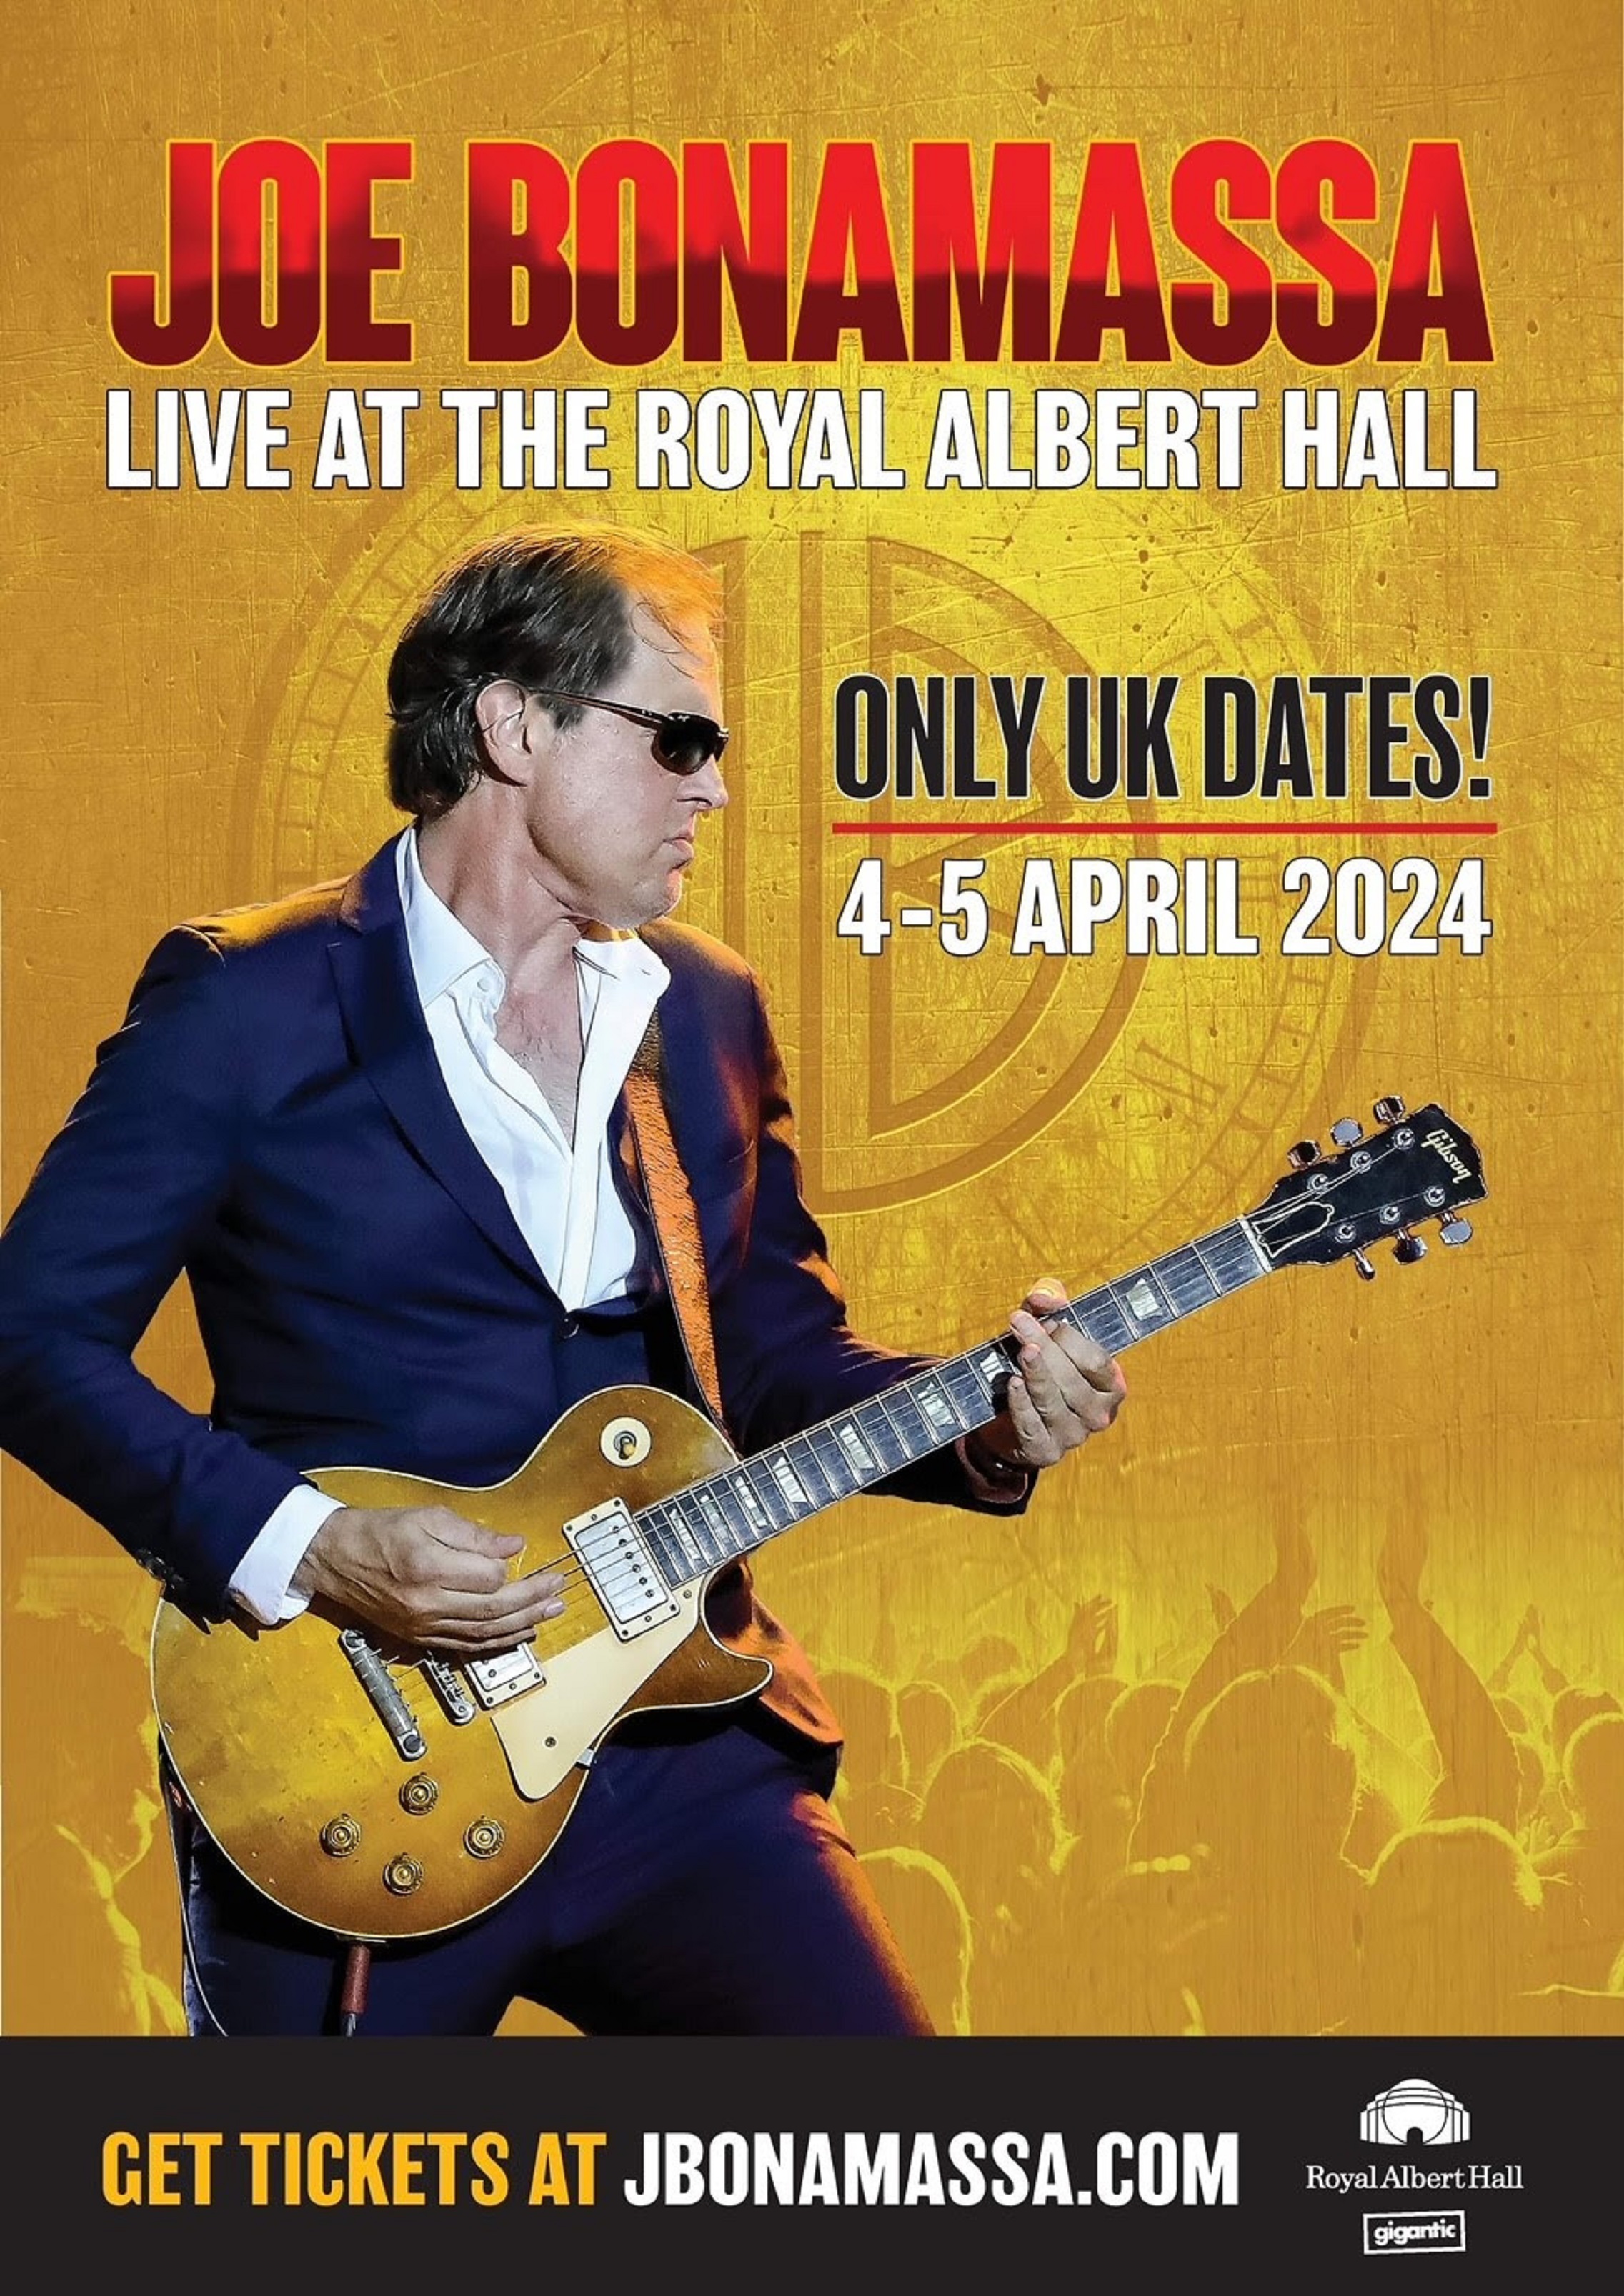 Joe Bonamassa to perform two nights at the prestigious Royal Albert Hall in April 2024